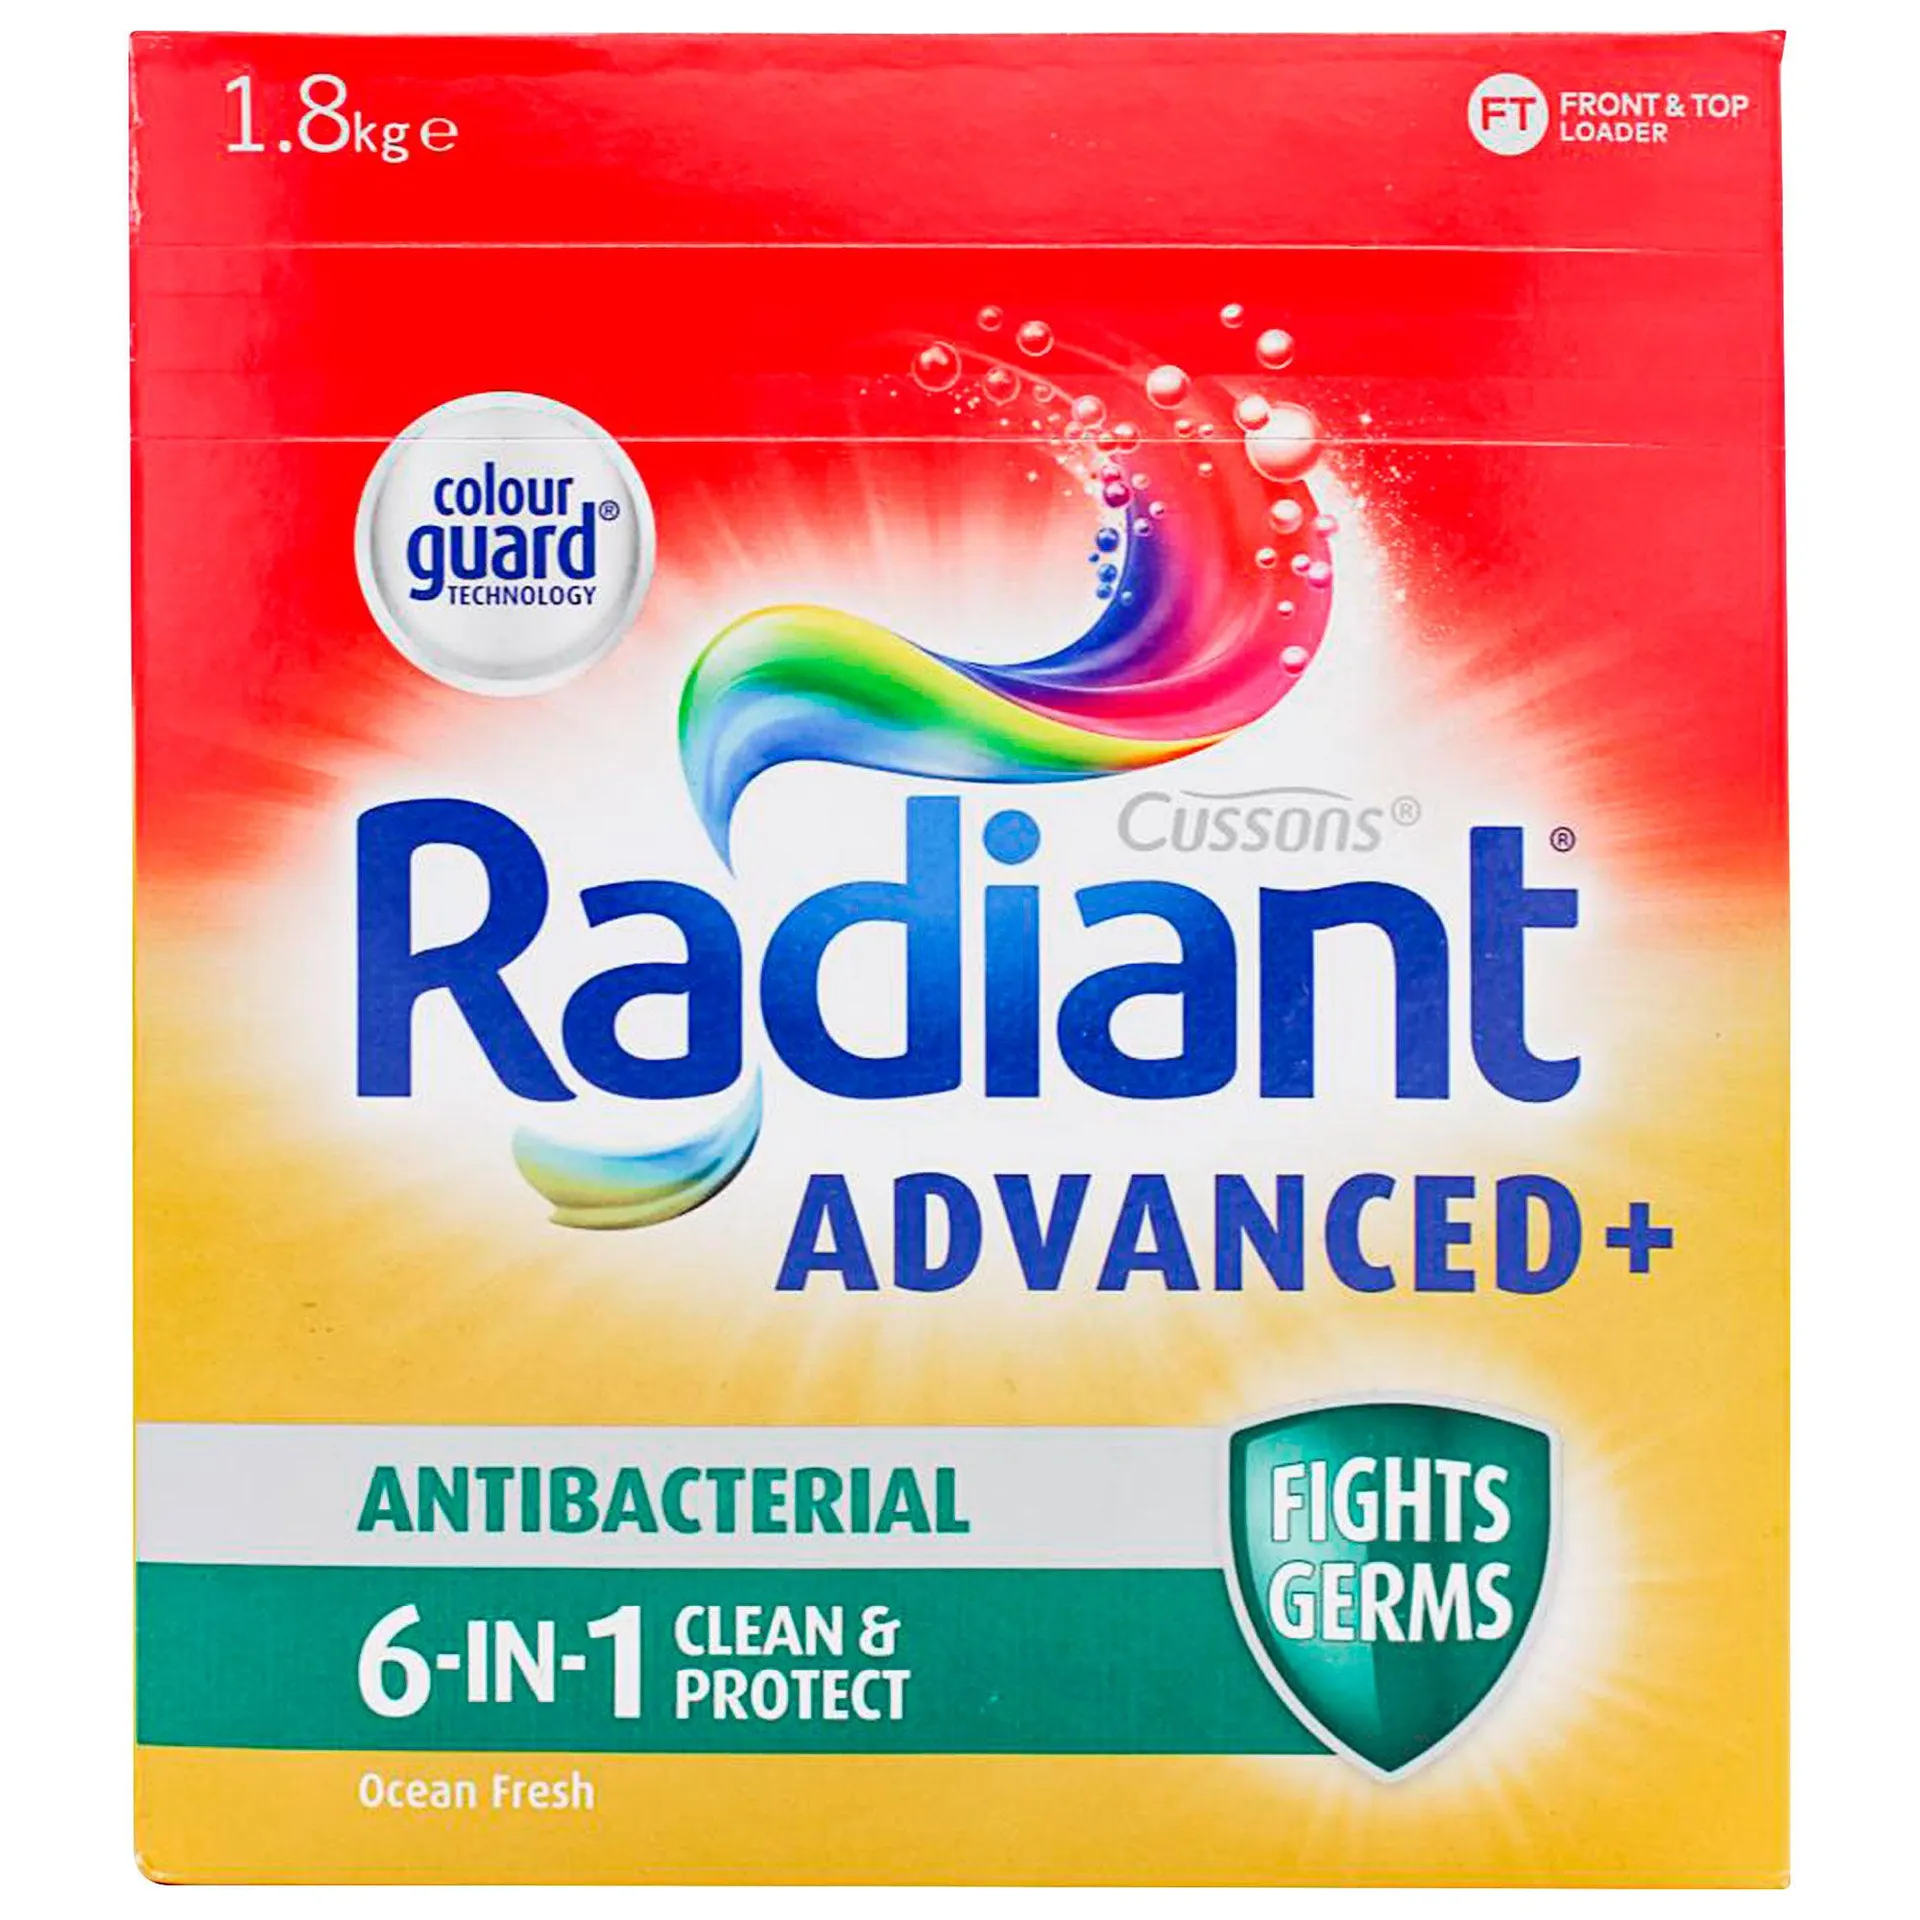 Radiant Powder Antibacterial 1.8kg